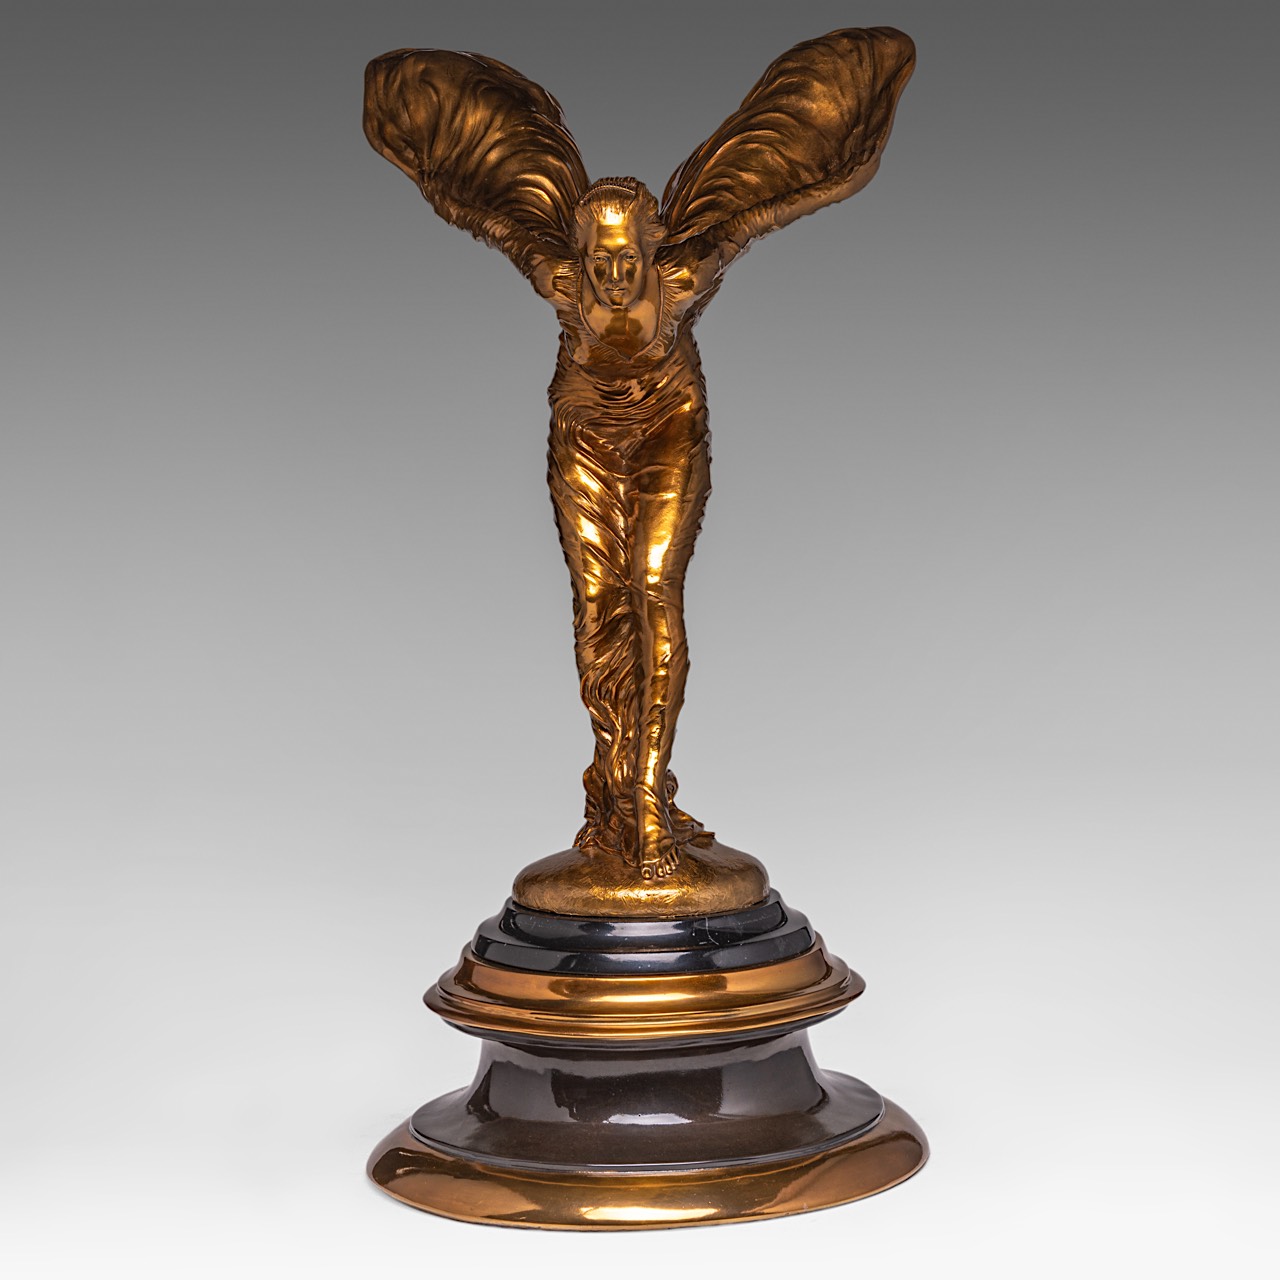 Charles Sykes (1875-1950), gilt bronze sculpture of the 'Spirit of Ecstasy', Rolls-Royce, H 69 cm - Image 9 of 14